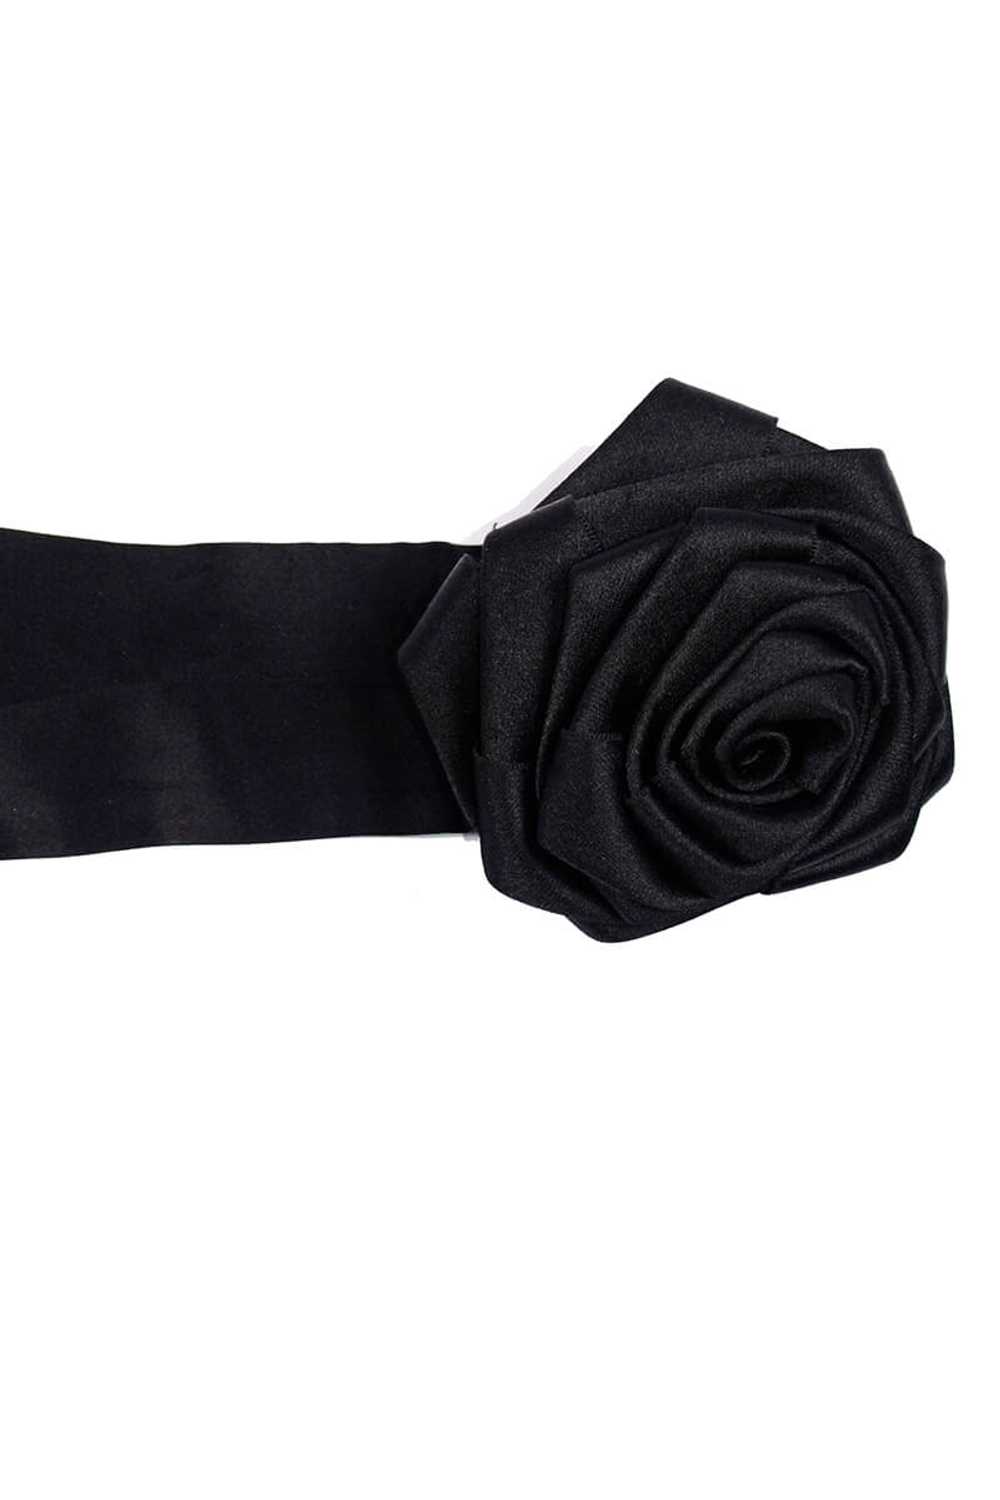 1990s Donna Karan Black Silk Satin Rose Belt - image 5